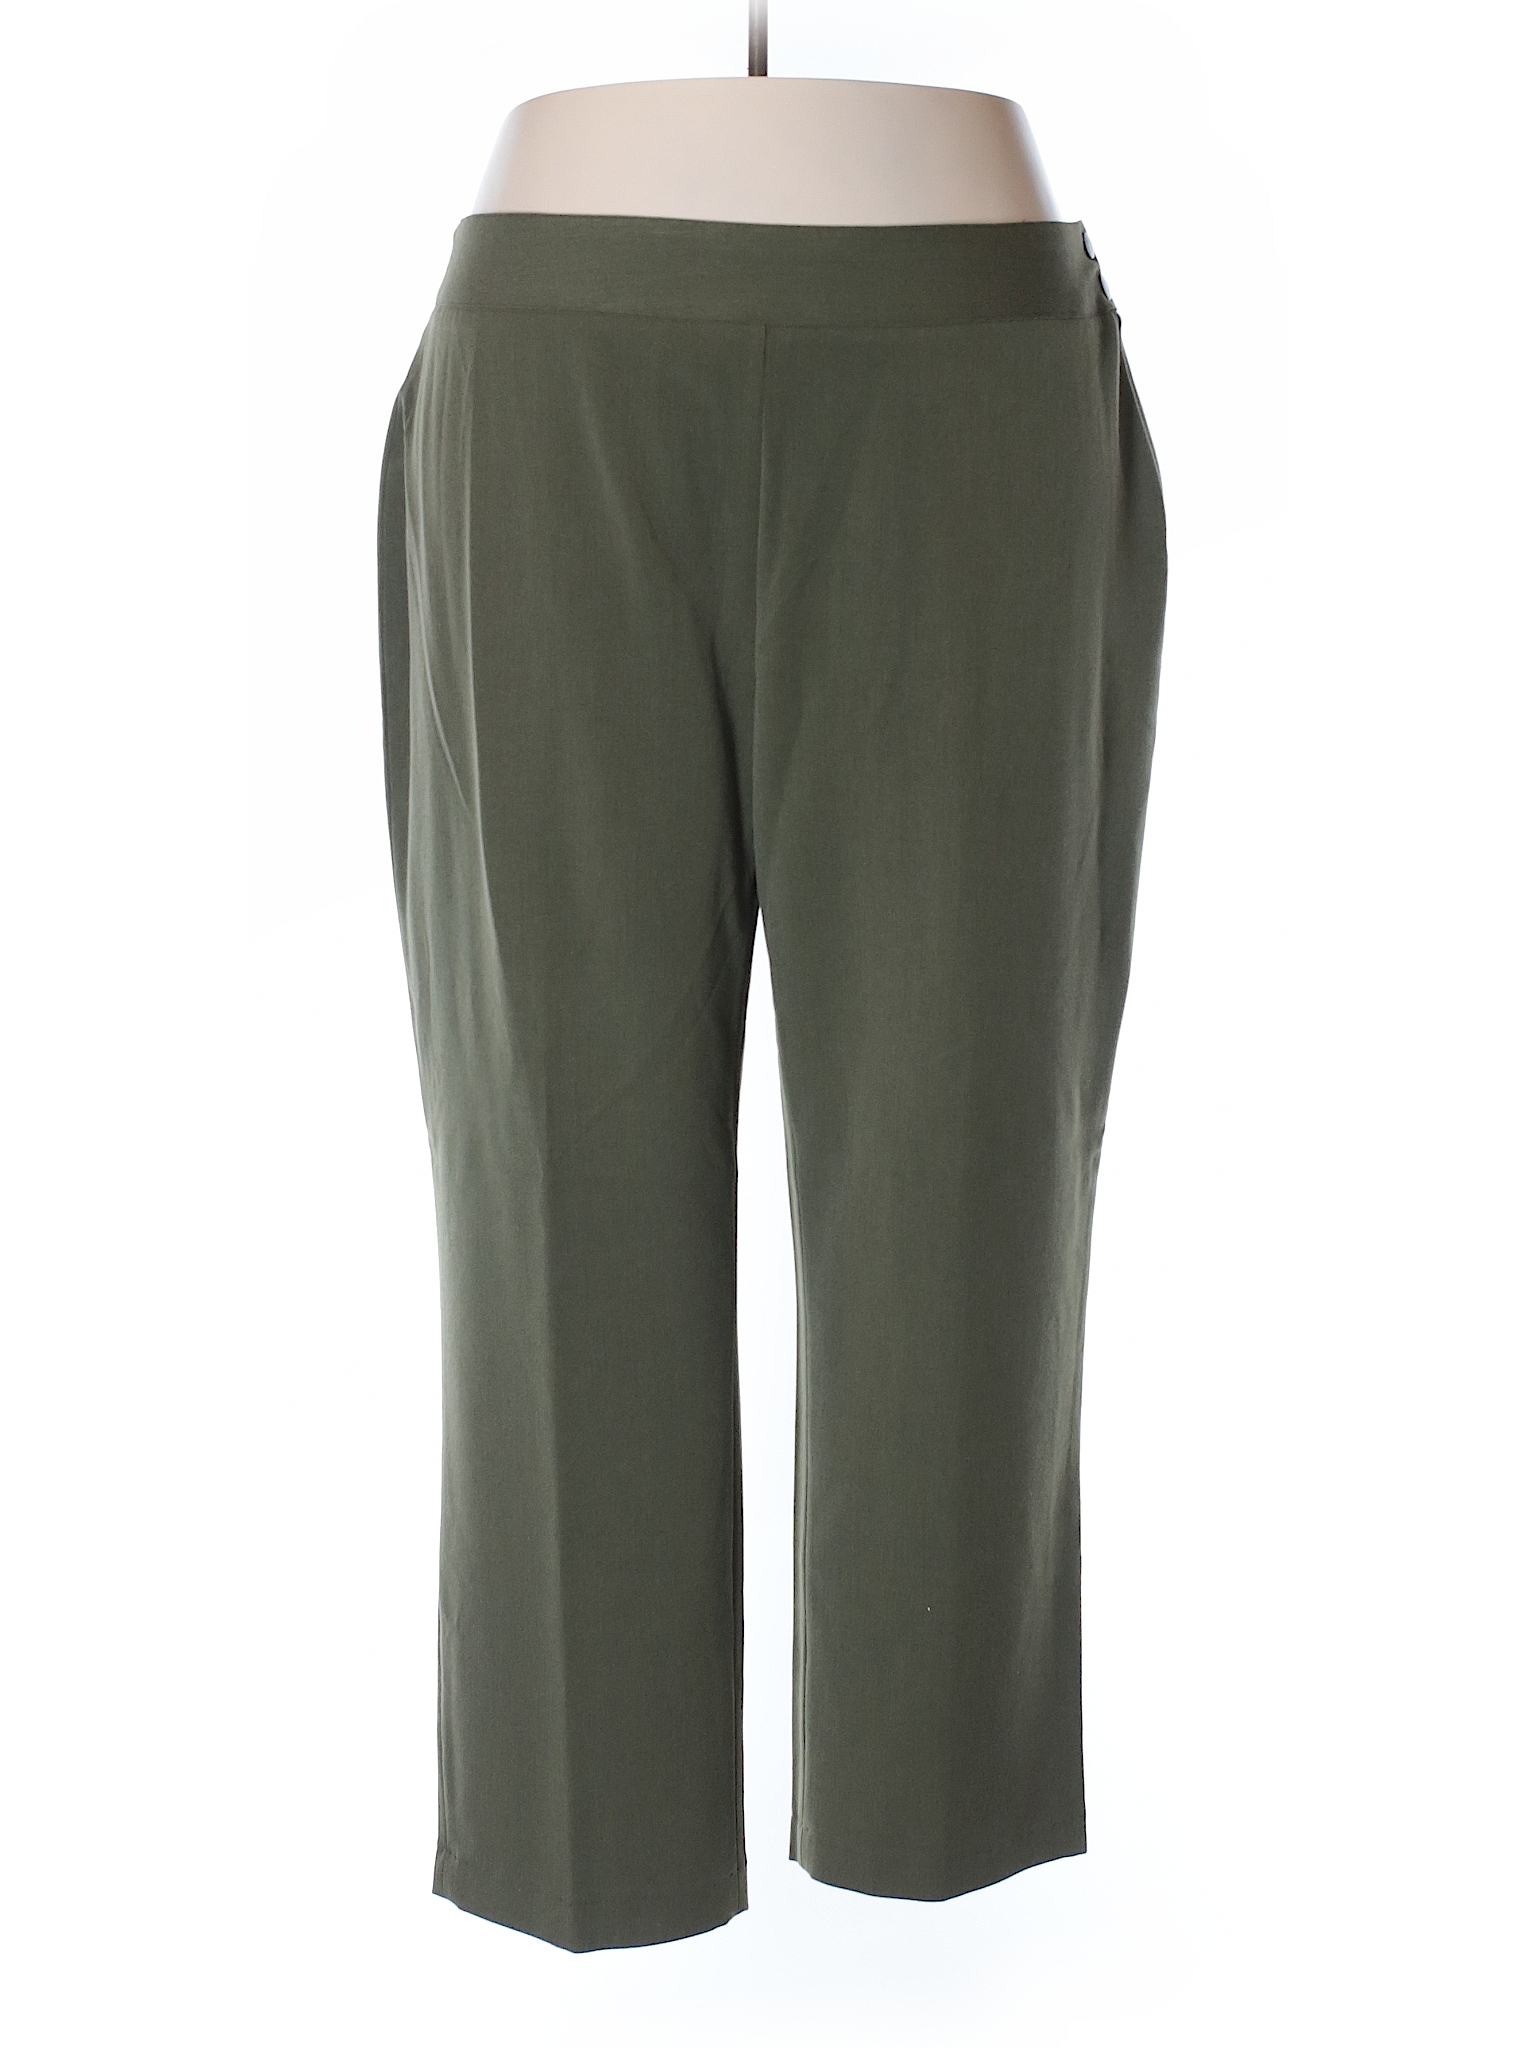 Charter Club Solid Dark Green Dress Pants Size 22W (Plus) - 71% off ...